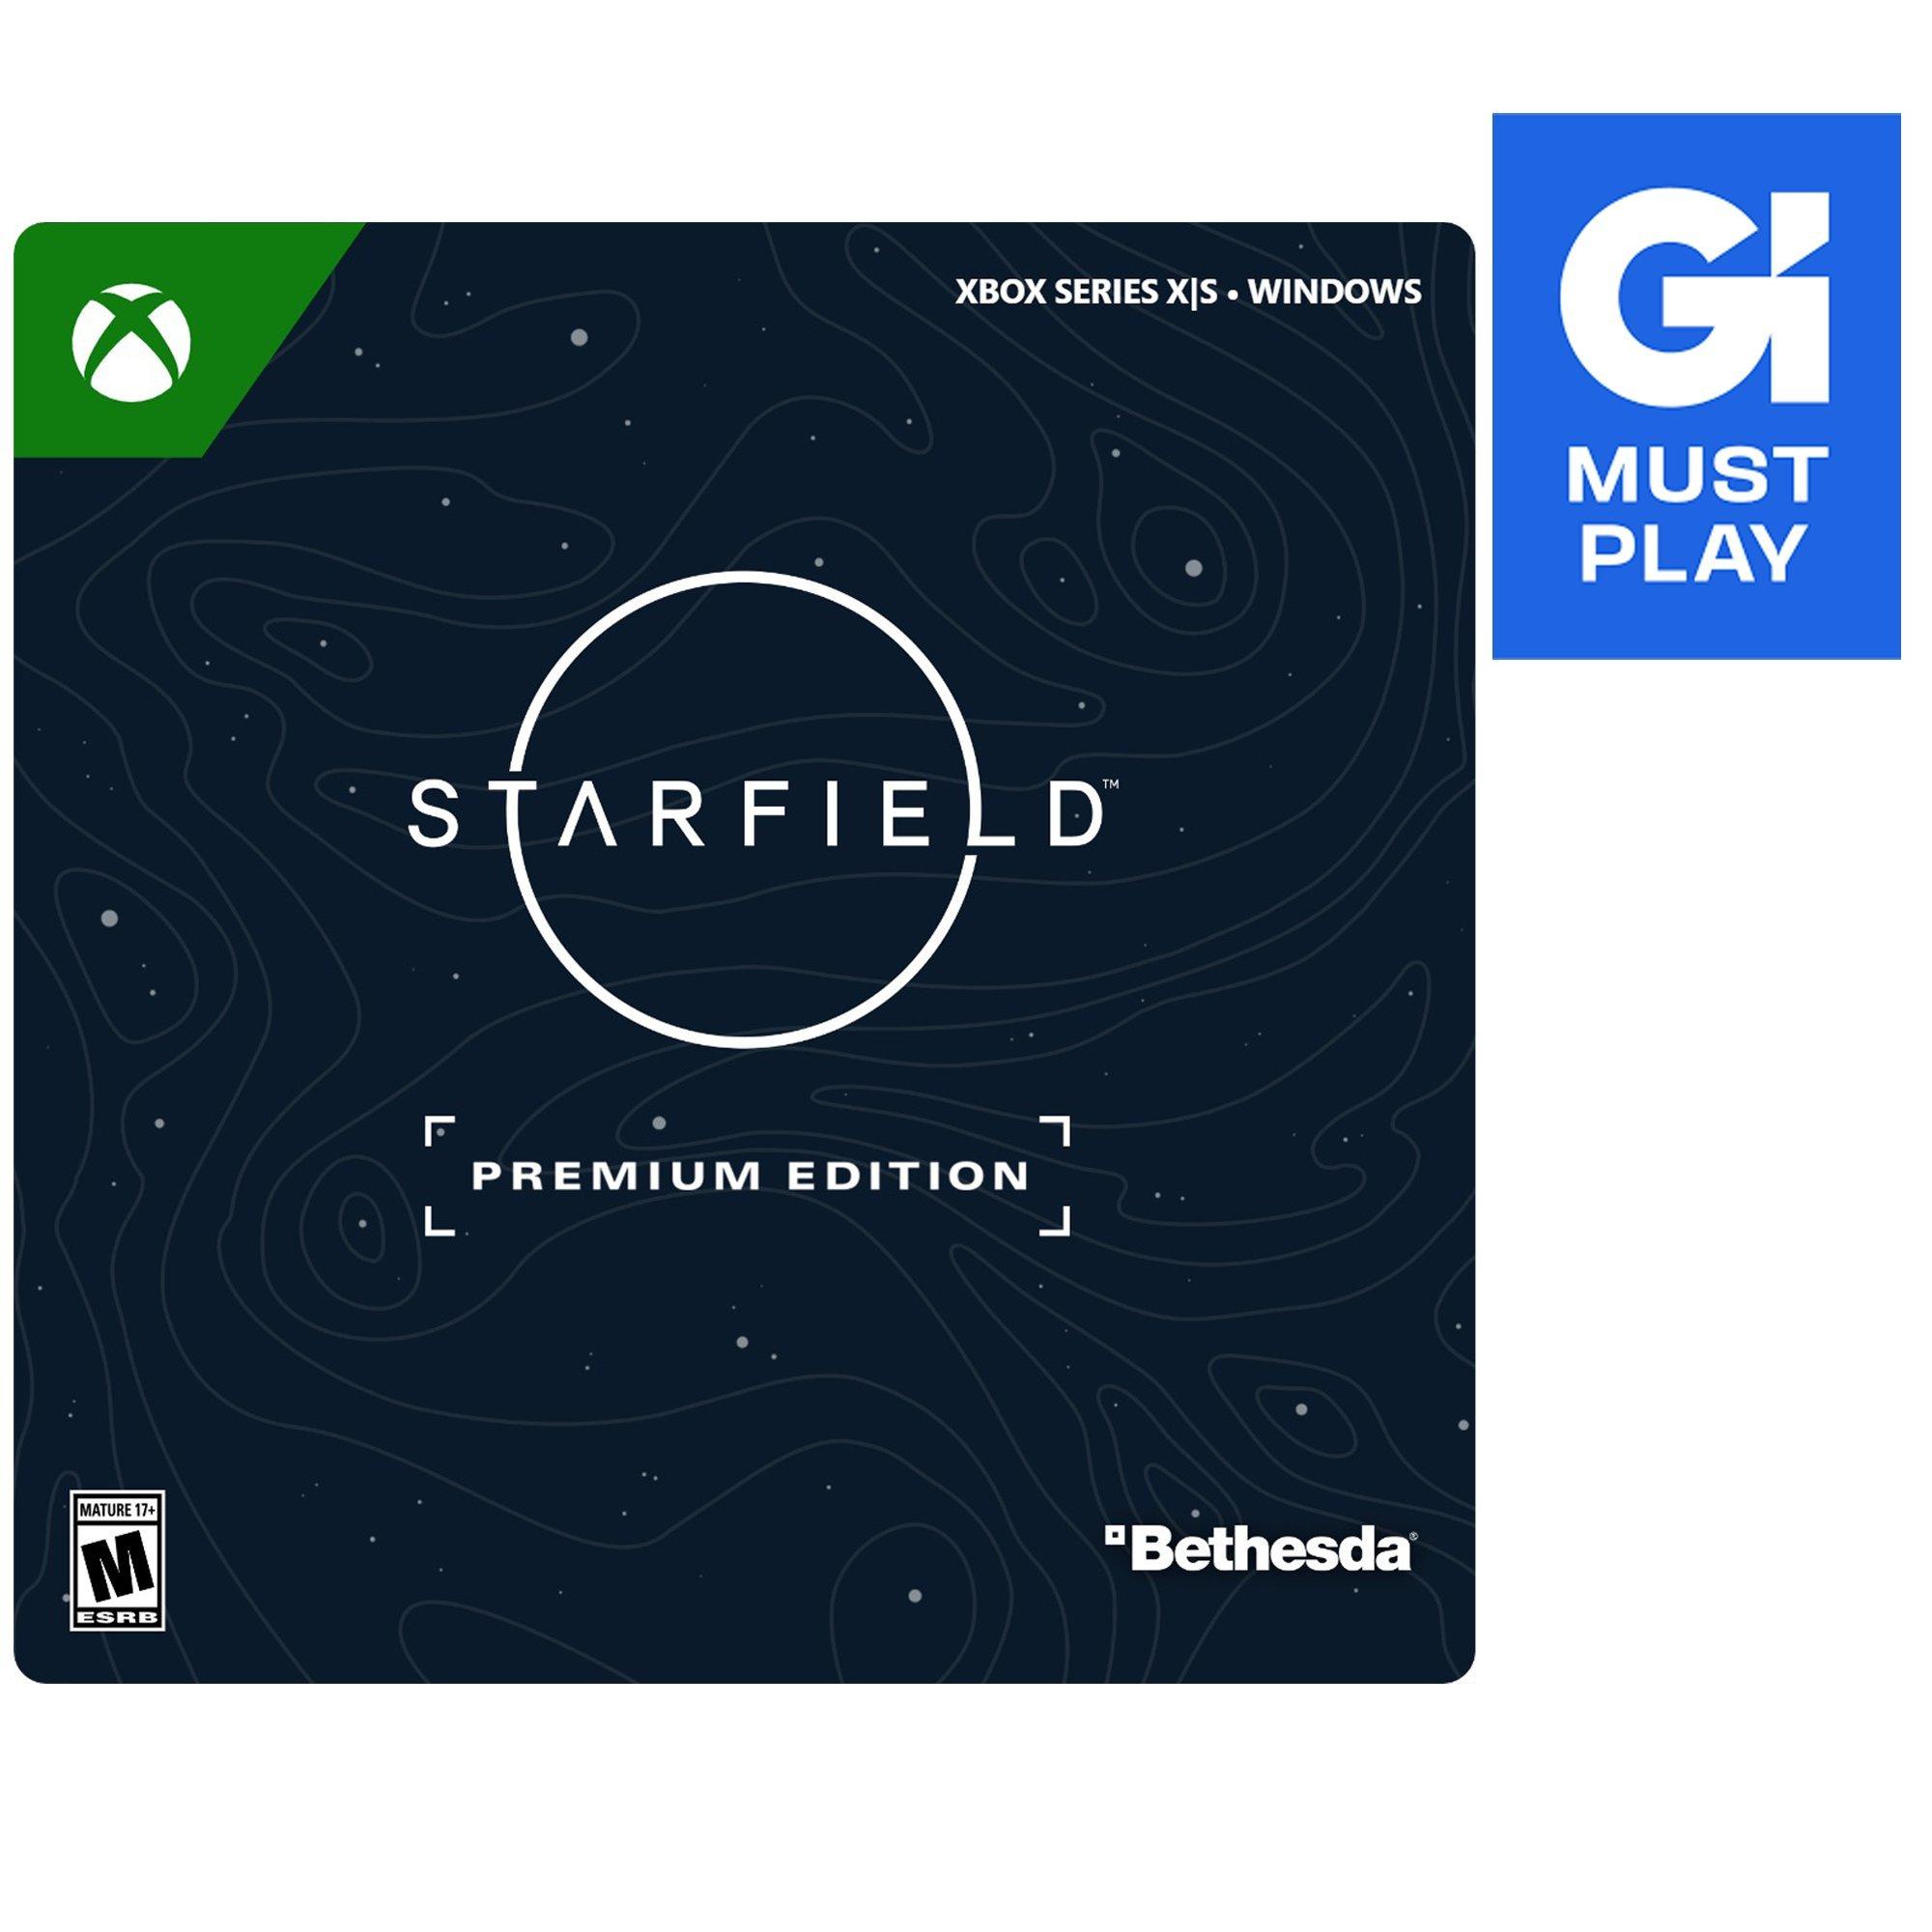 Starfield Premium Edition - | Windows Series GameStop X, X Series | Xbox Xbox